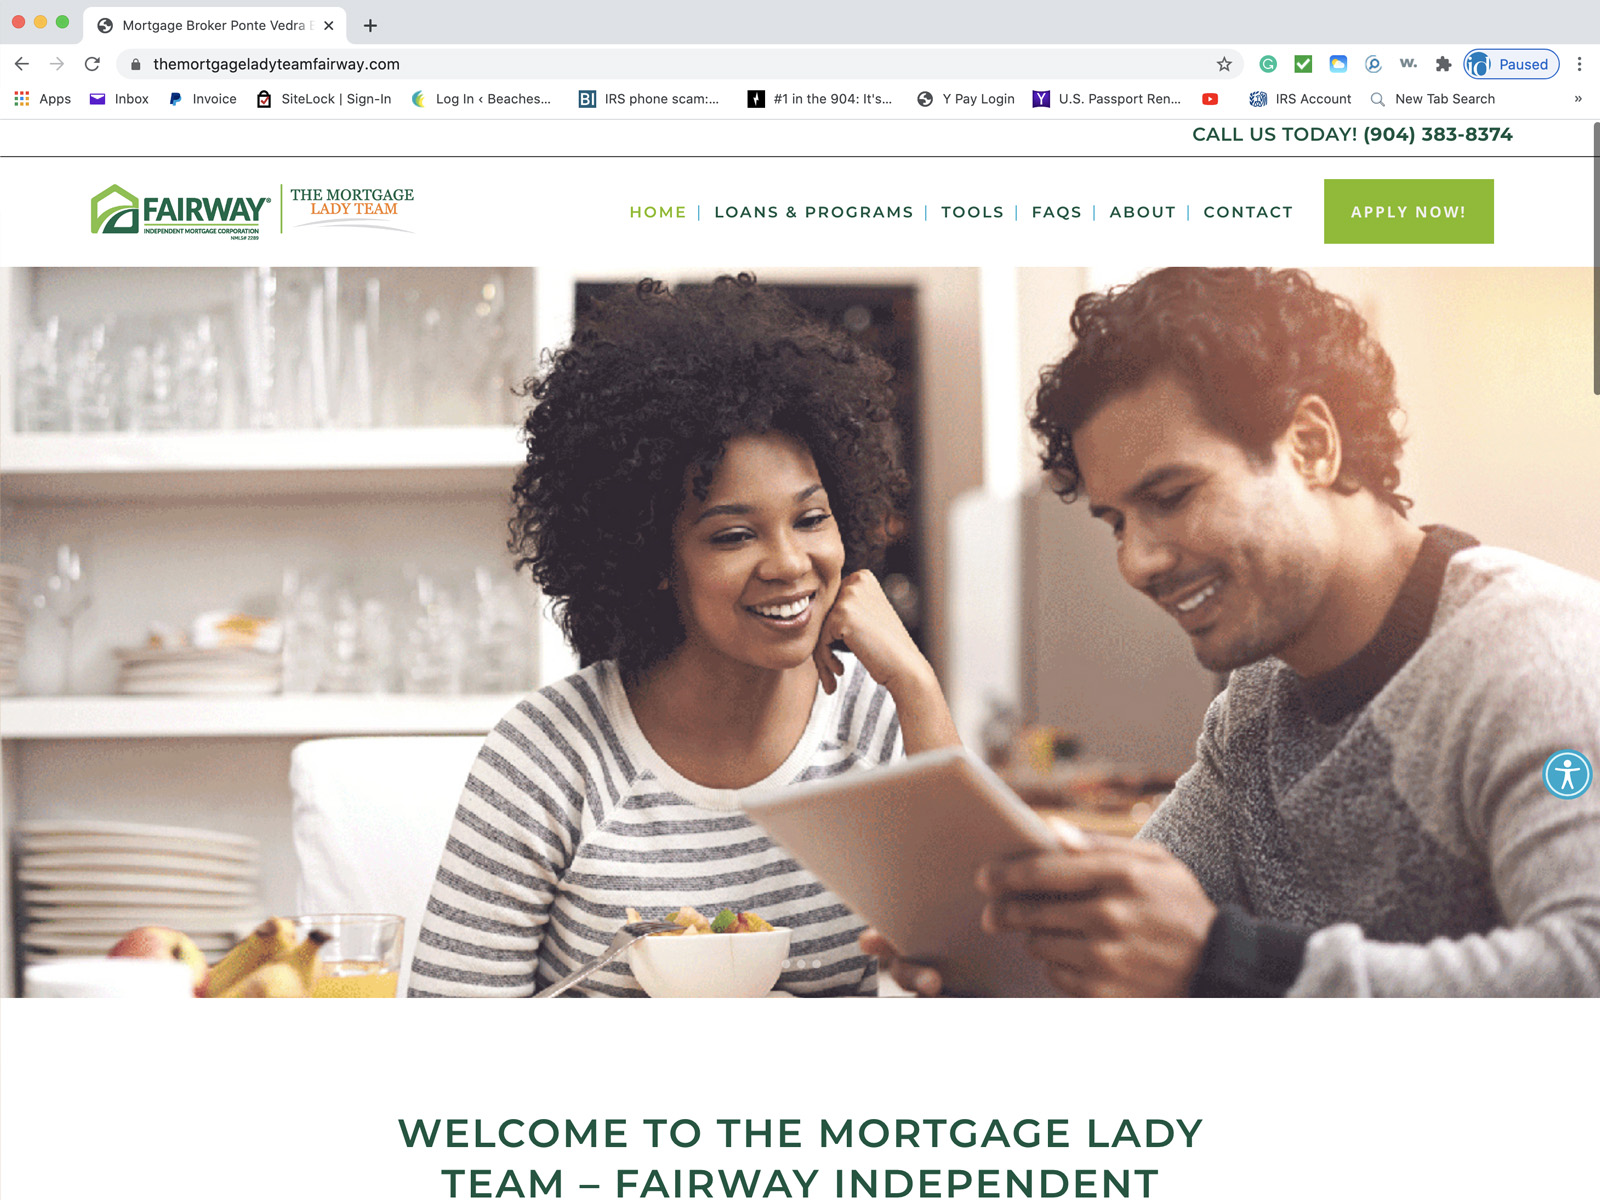 The Mortgage Lady Team Fairway website